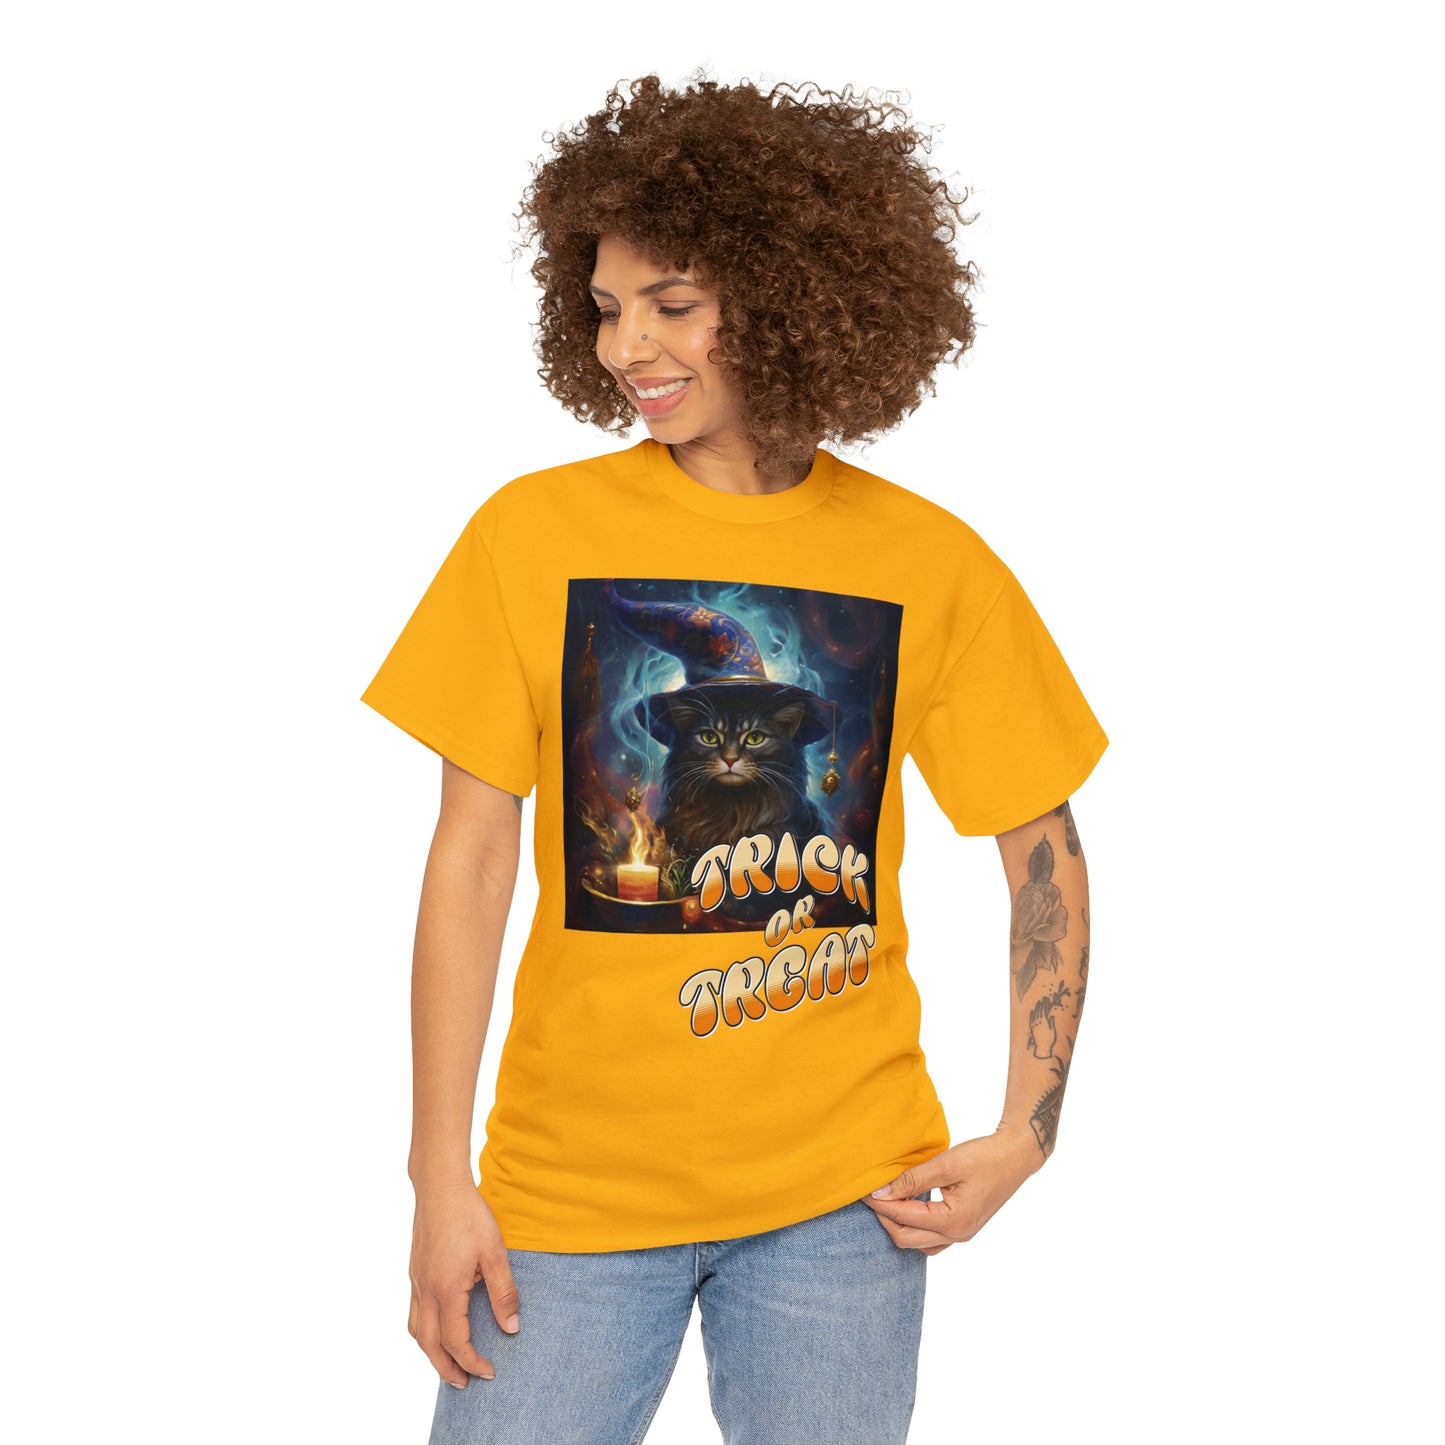 Unisex Cotton T-Shirt Trick or Treat Halloween Cat Graphic Costume Tee